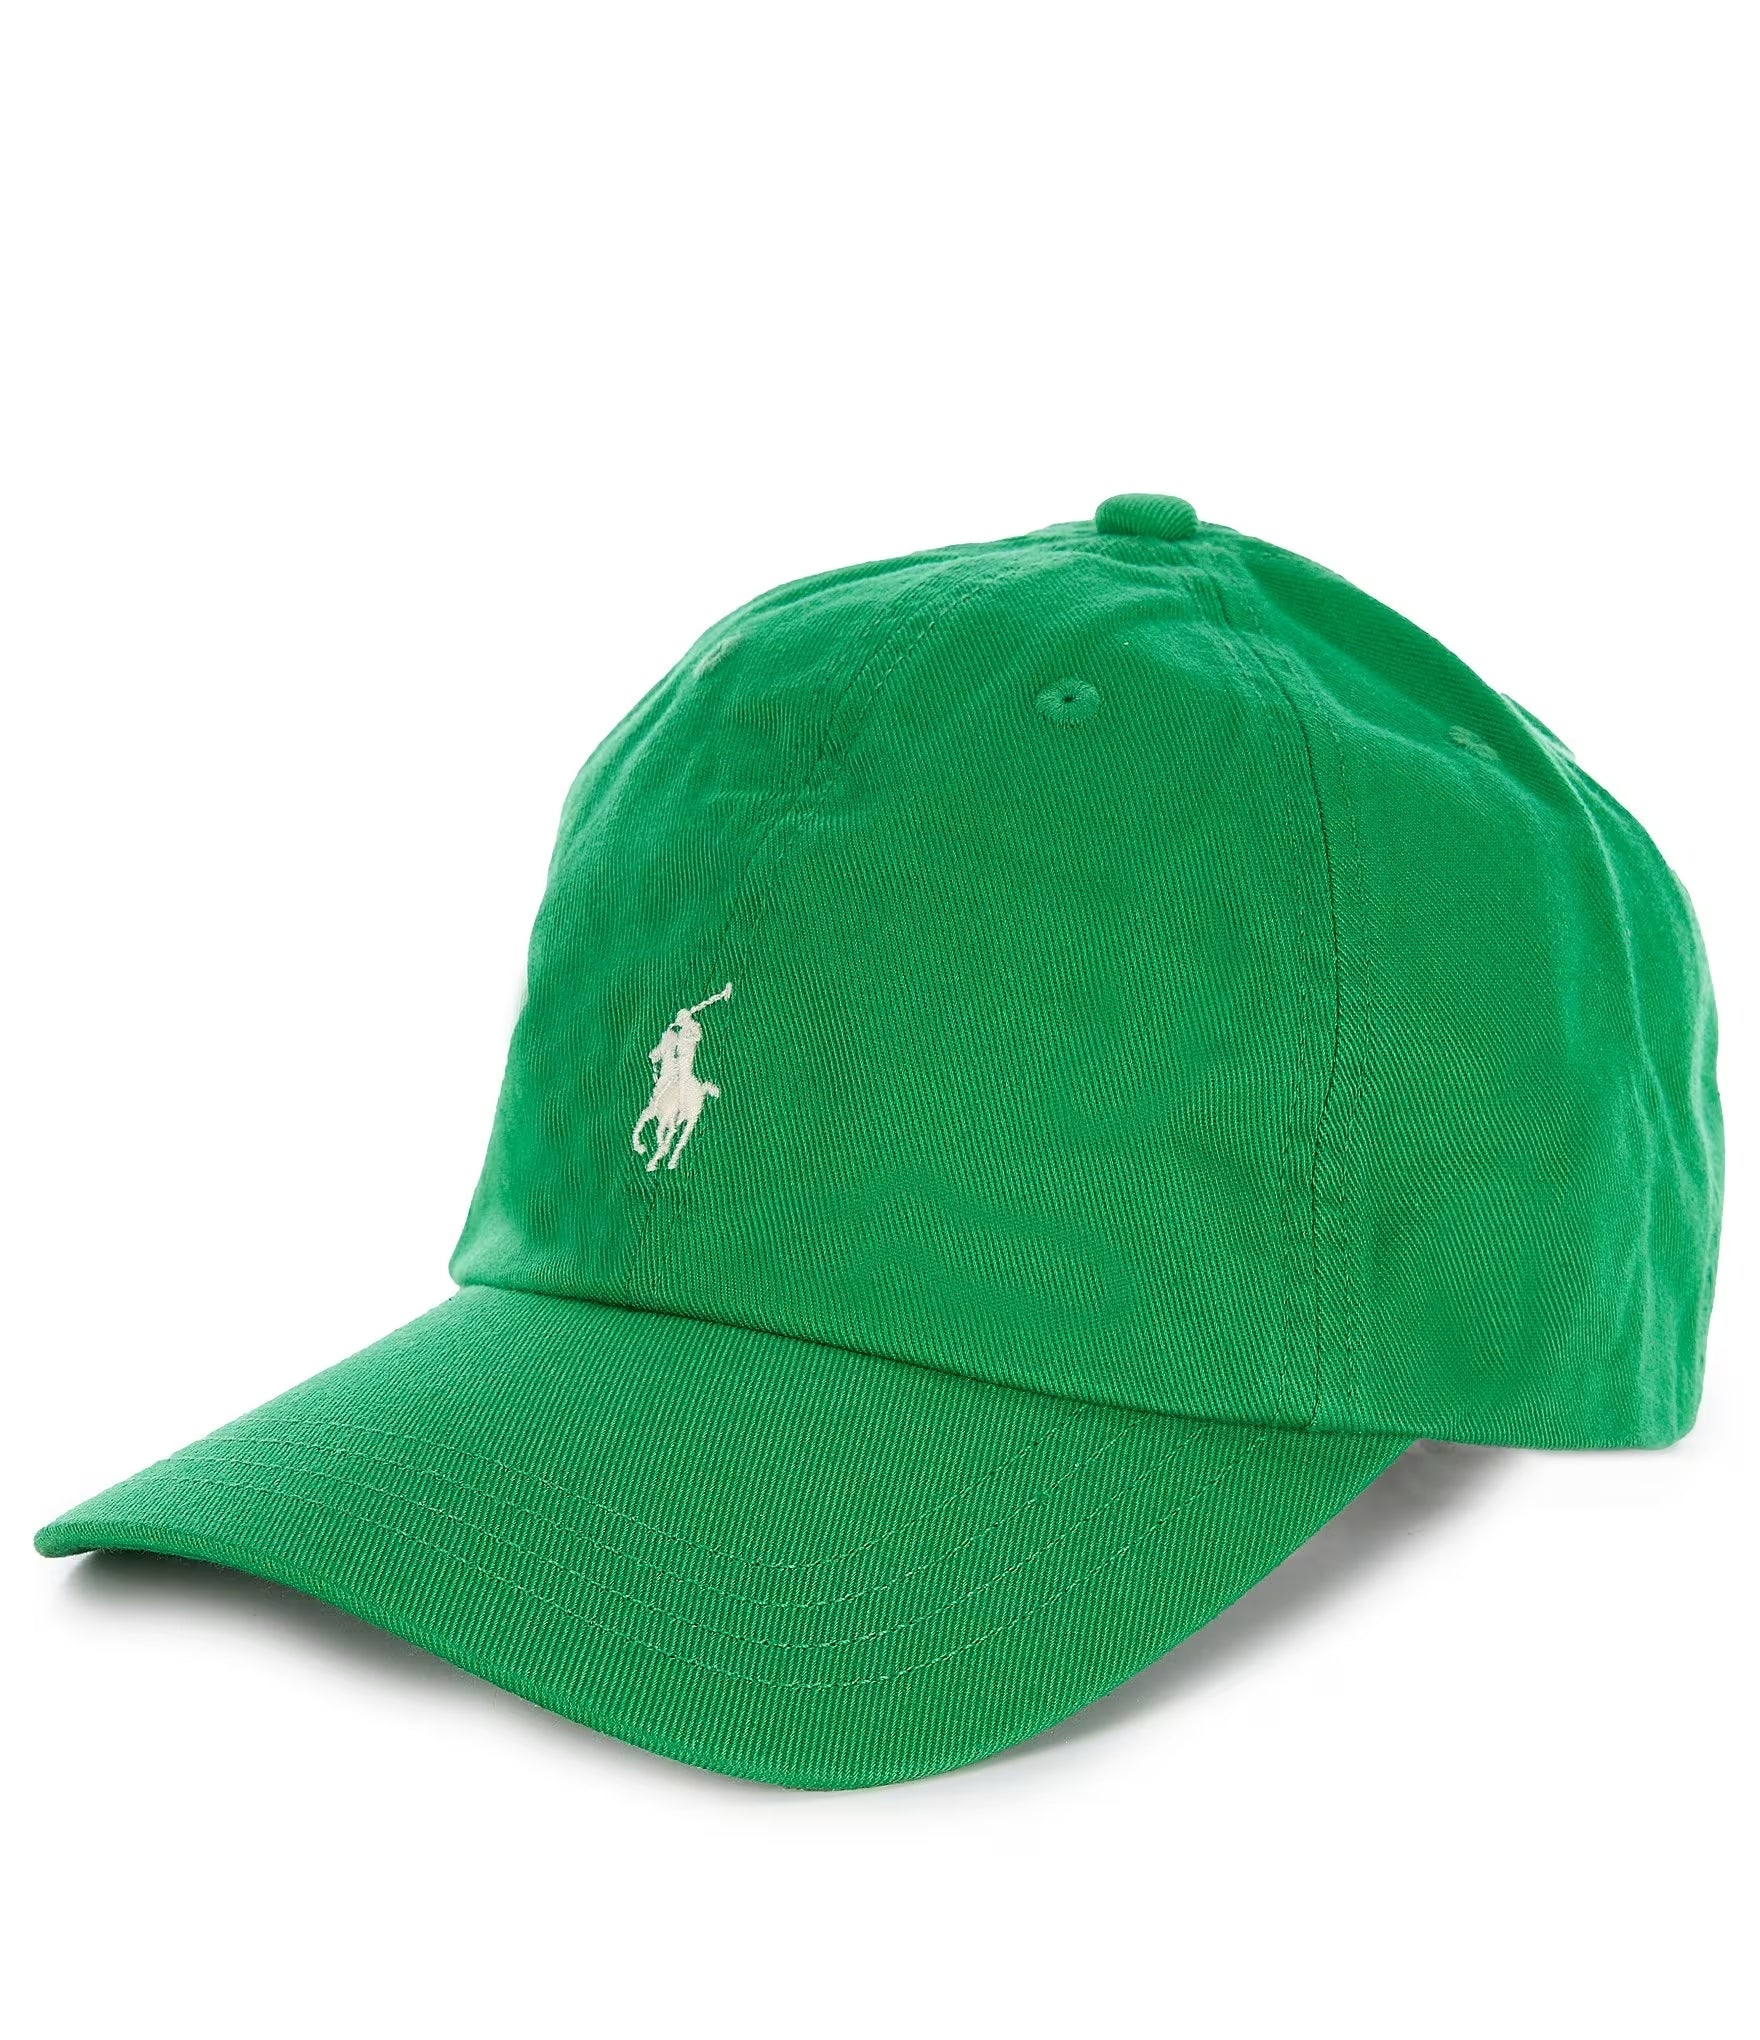 Green front logo cap